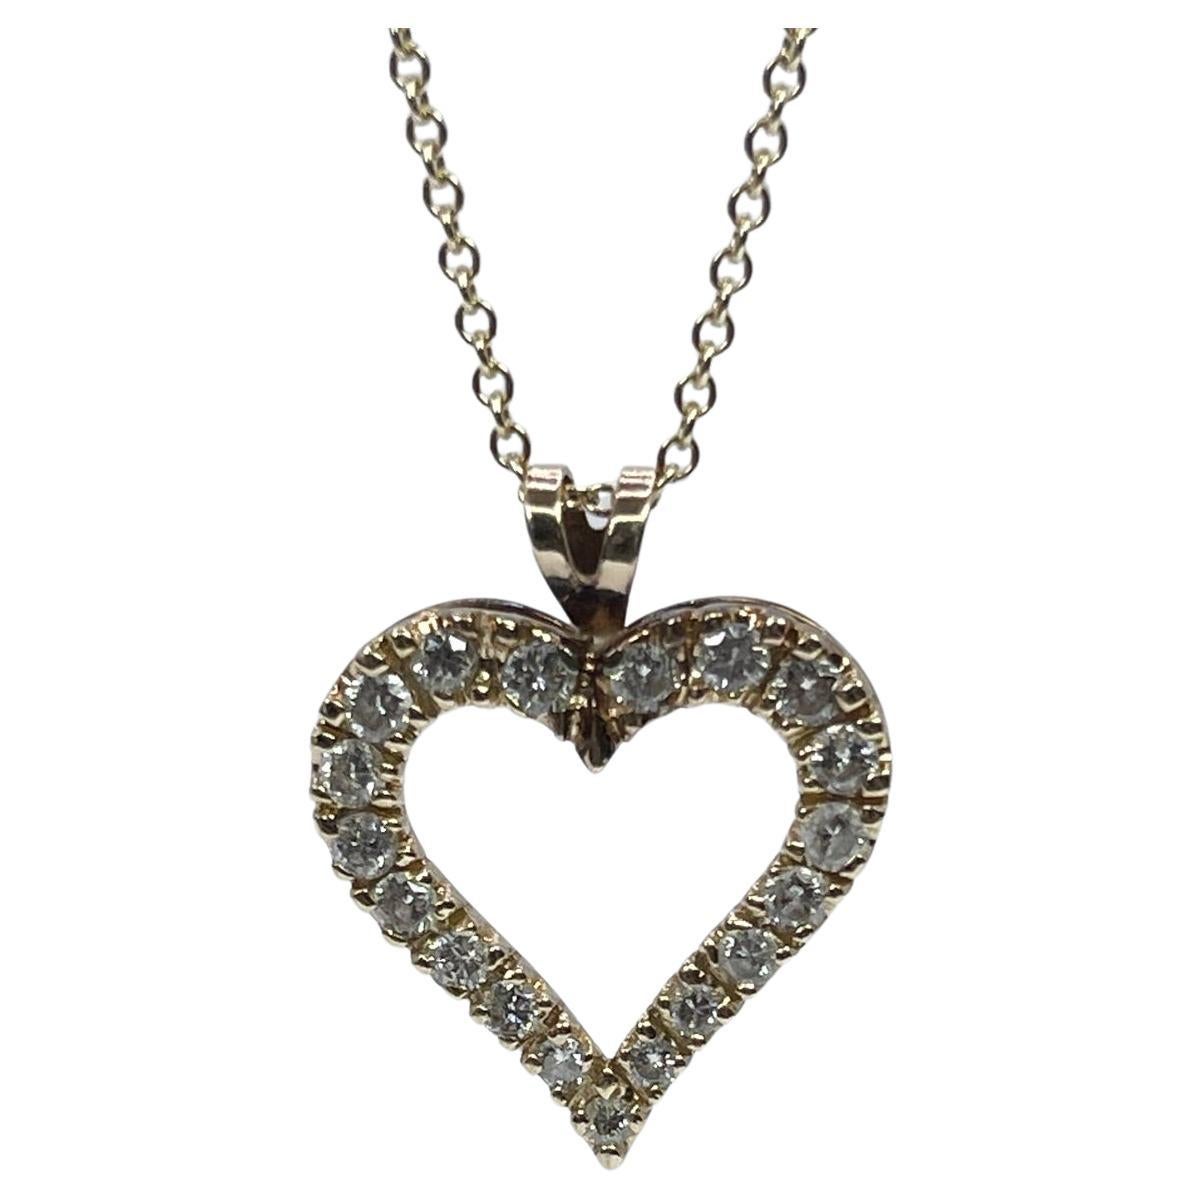 Collier pendentif en forme de cœur en or 14 carats et diamants 0,50 carat, cadeau de Noël en vente